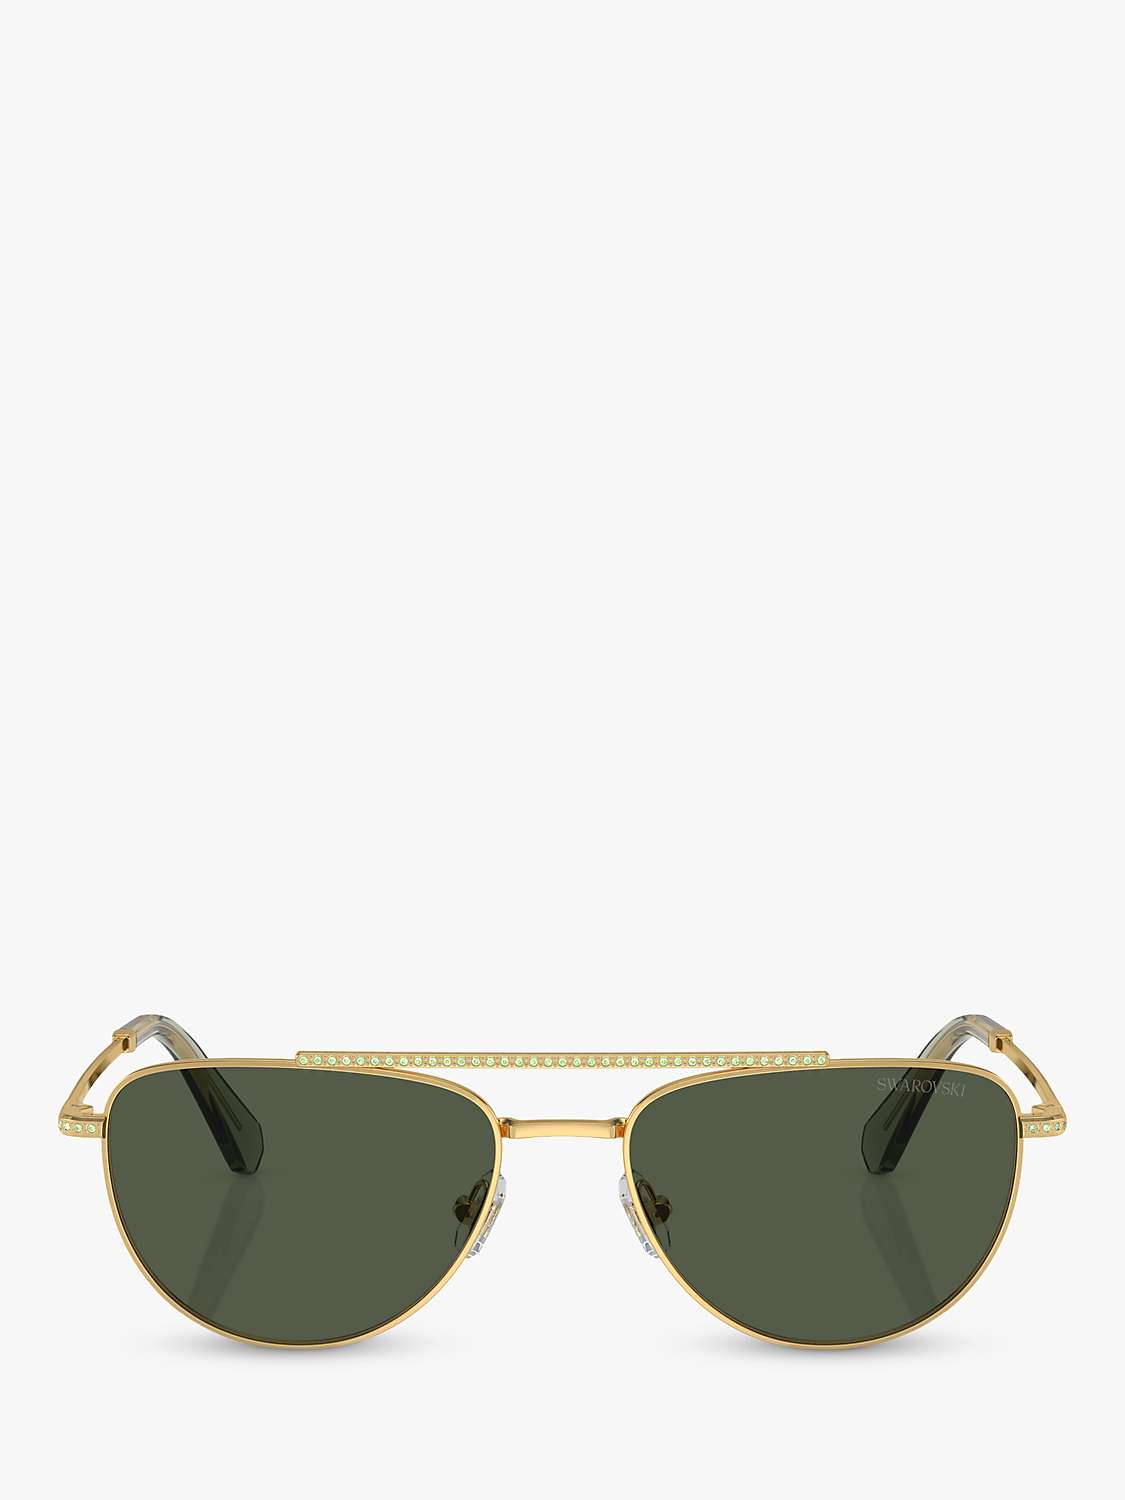 Buy Swarovski SK7007 Women's Irregular Sunglasses, Gold/Green Online at johnlewis.com